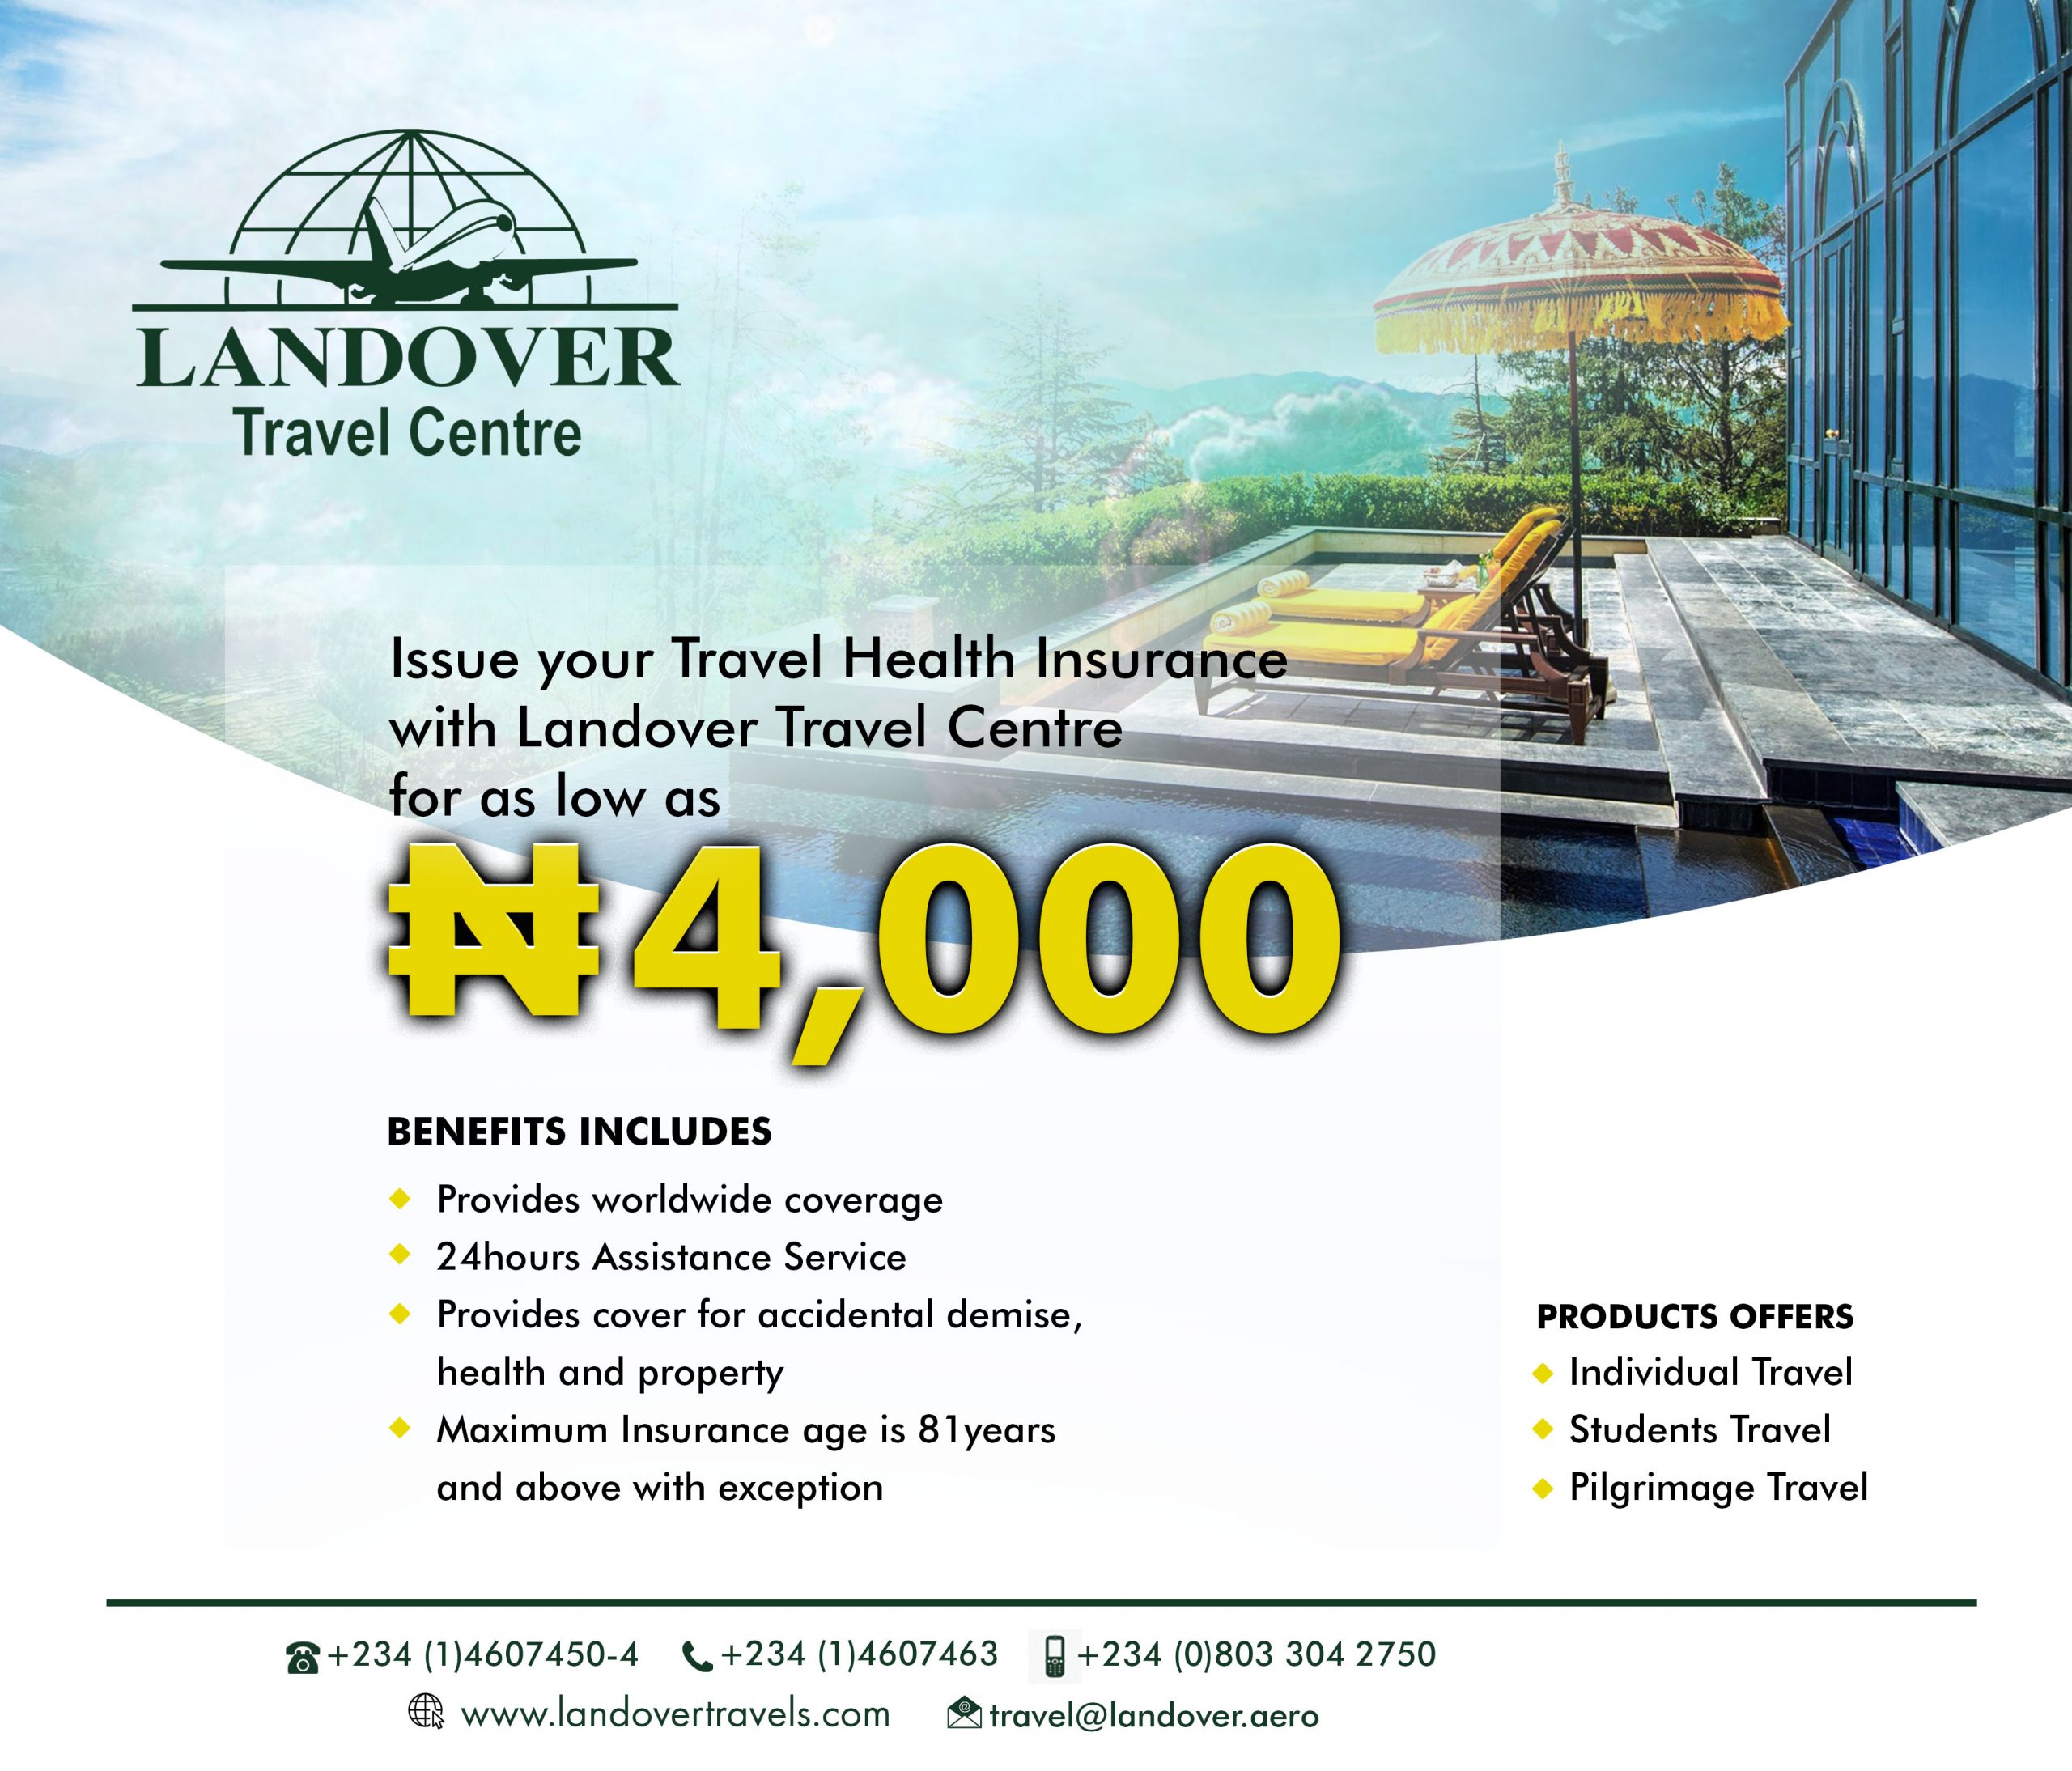 landover-travel-center-landover-company-limited